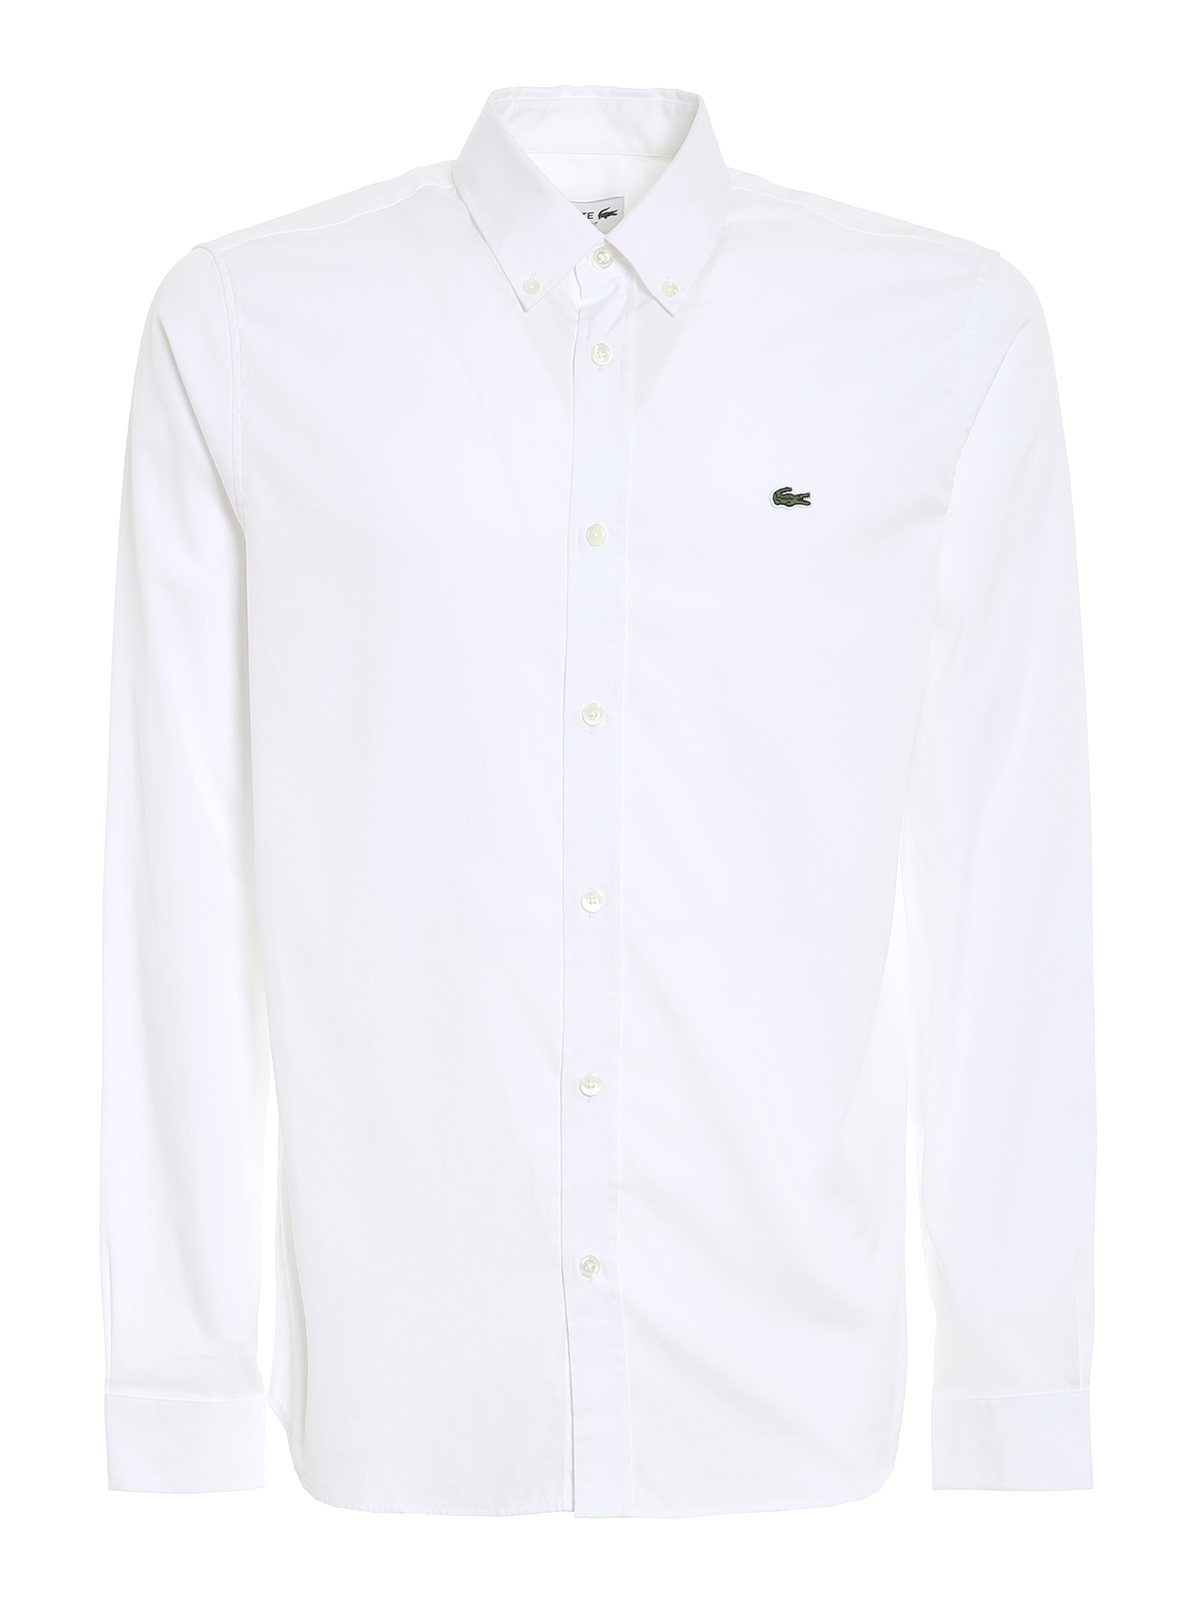 Lacoste Premium Cotton Shirt In White